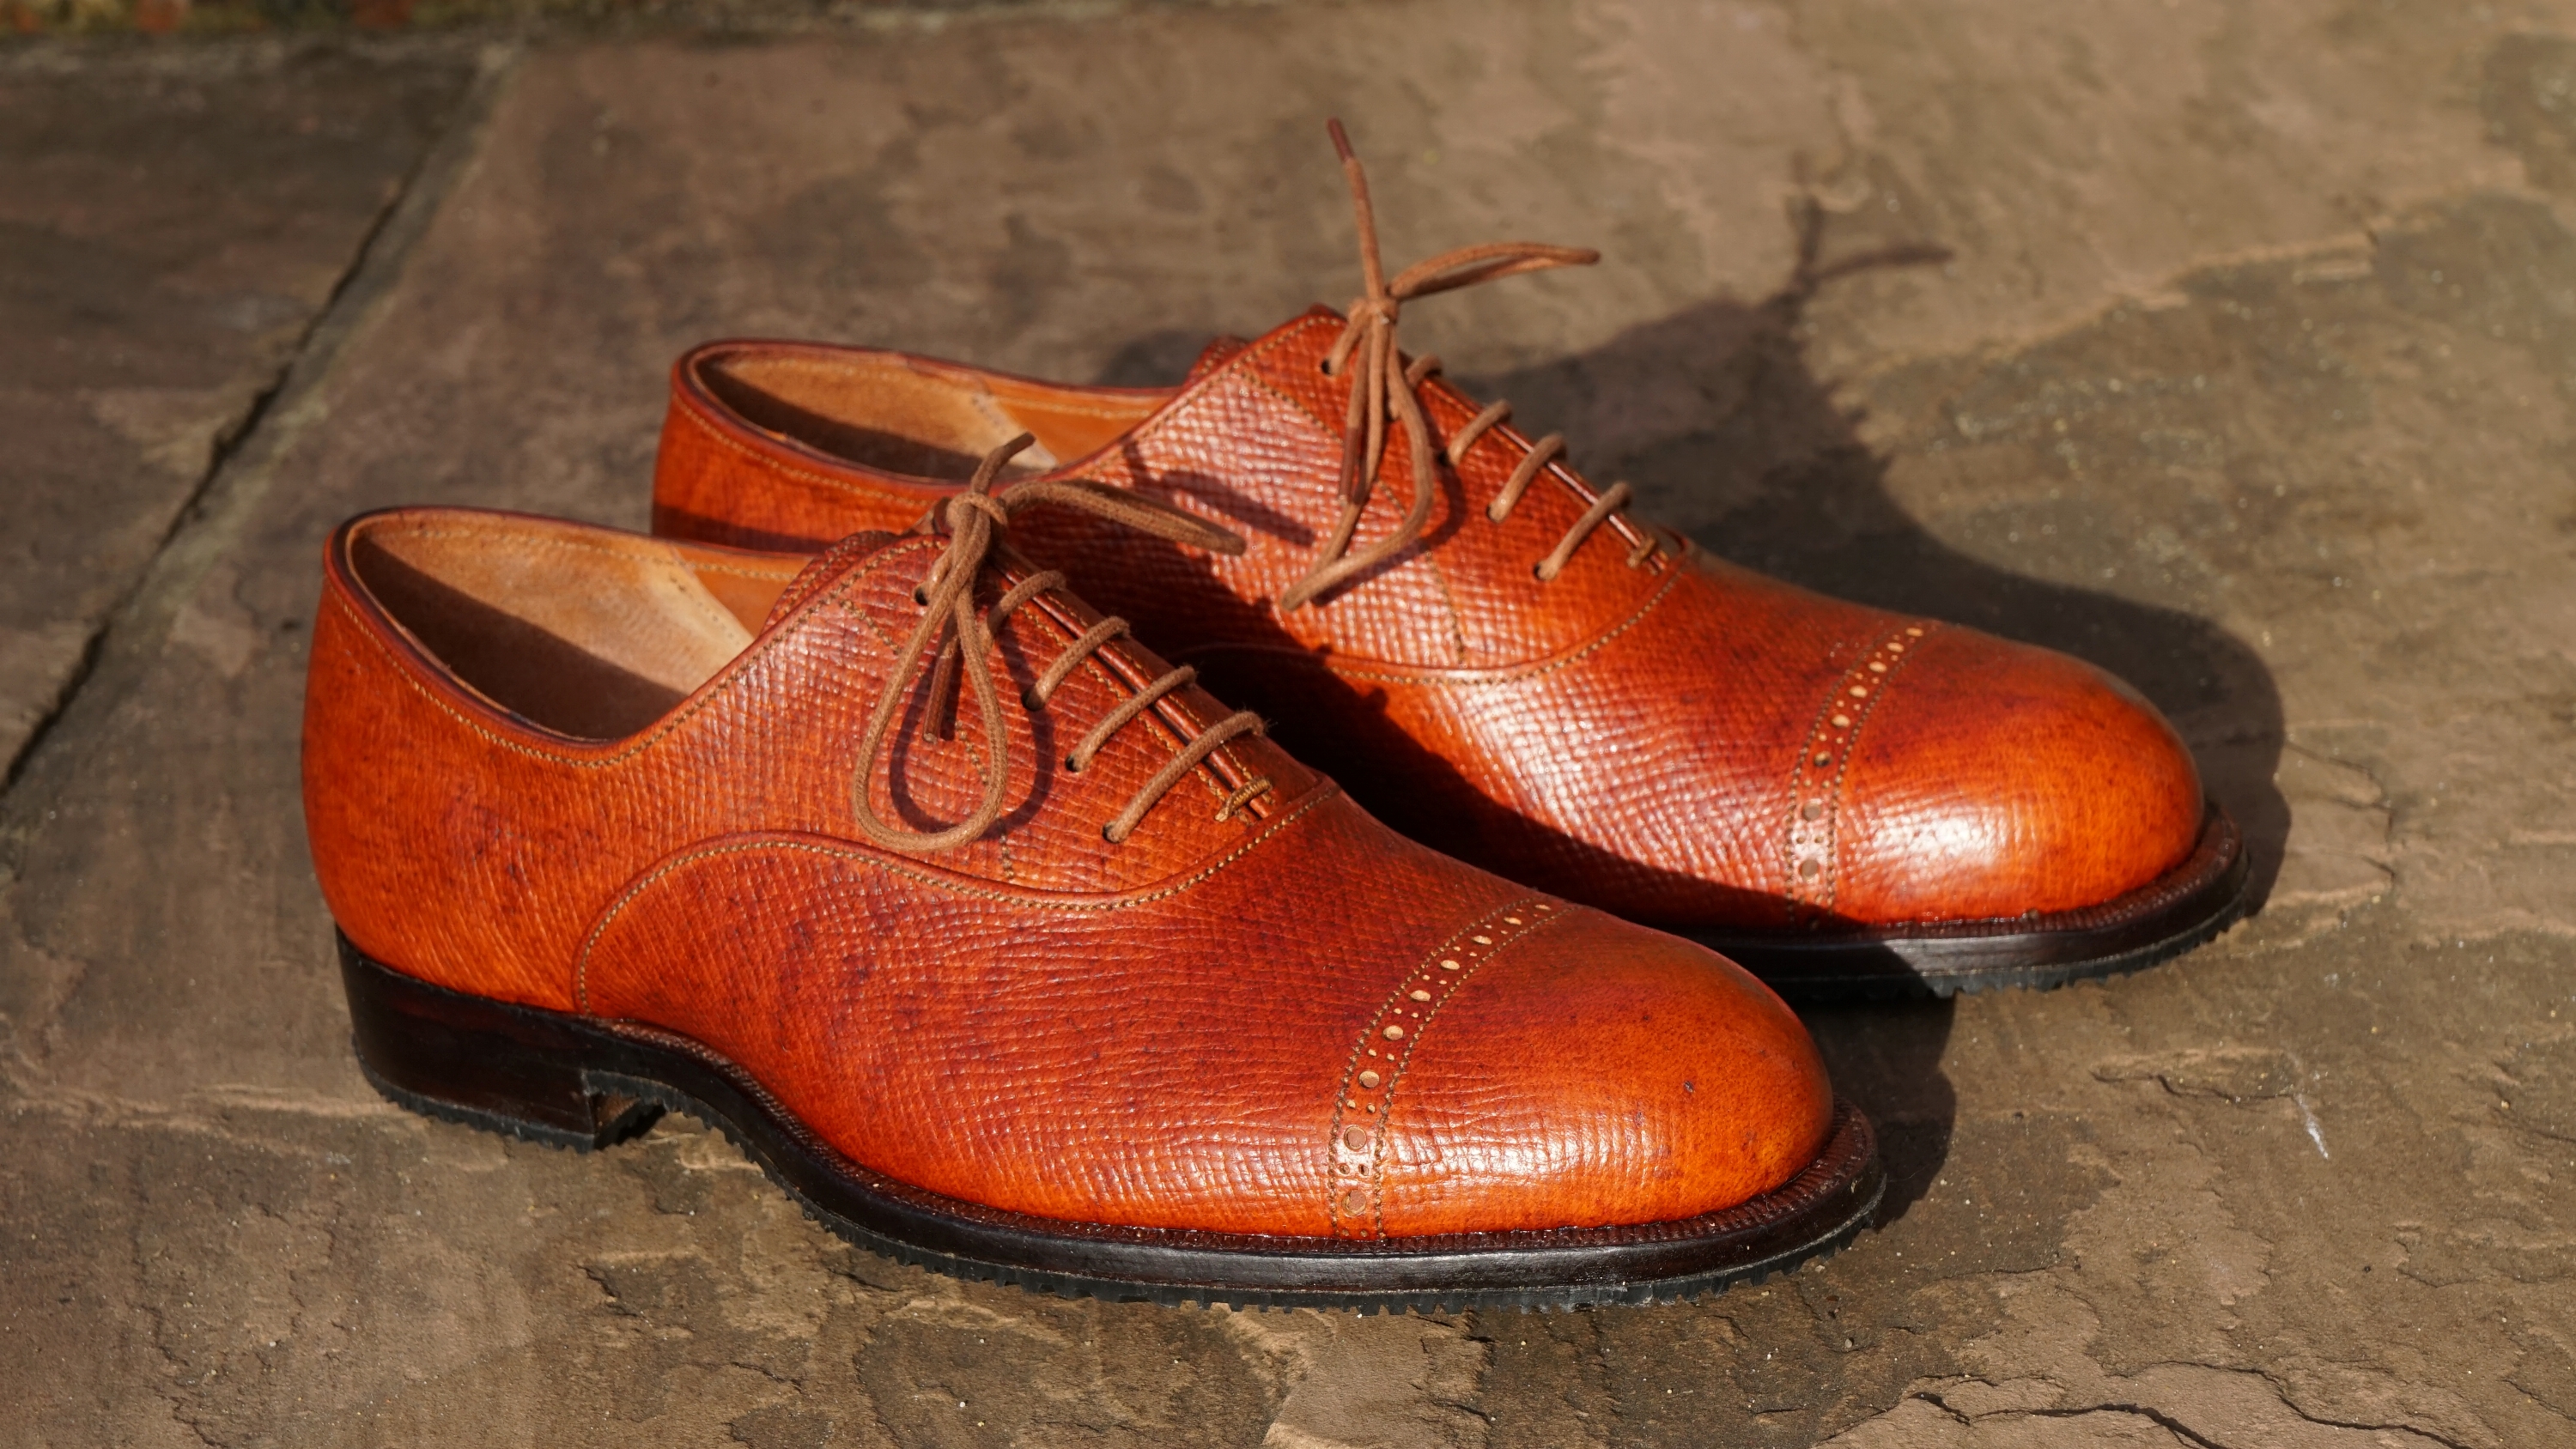 Gents Oxfords, unlined, with Vibram 7170 sole in Wild Deerskin Hatch - Rustic tan